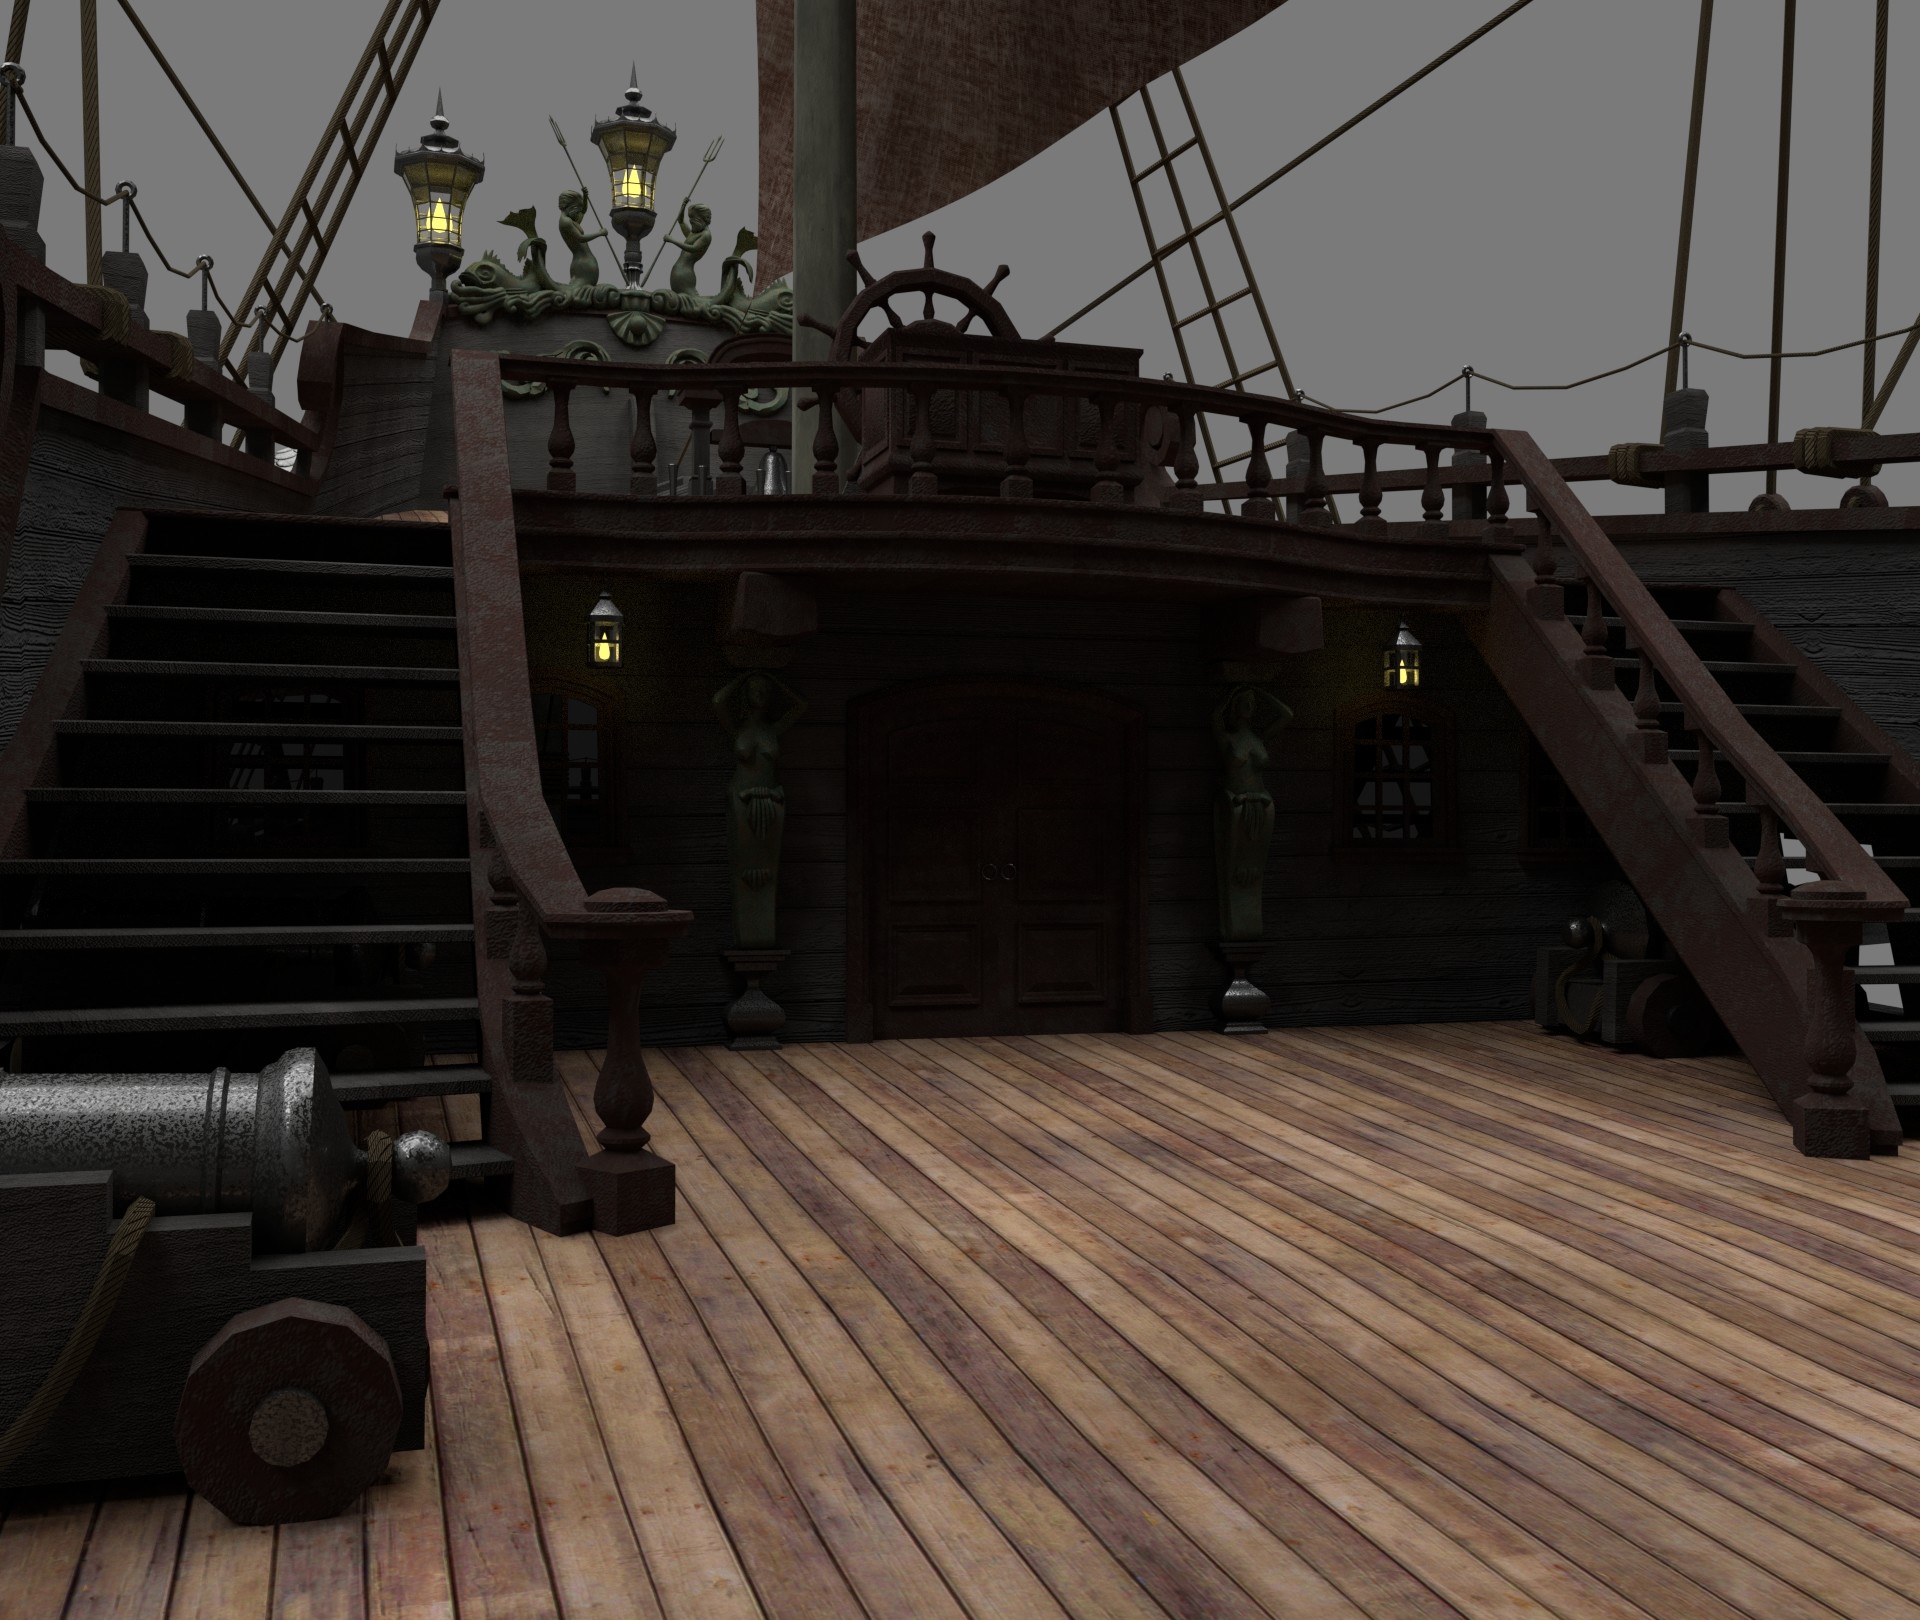 black pearl ship deck